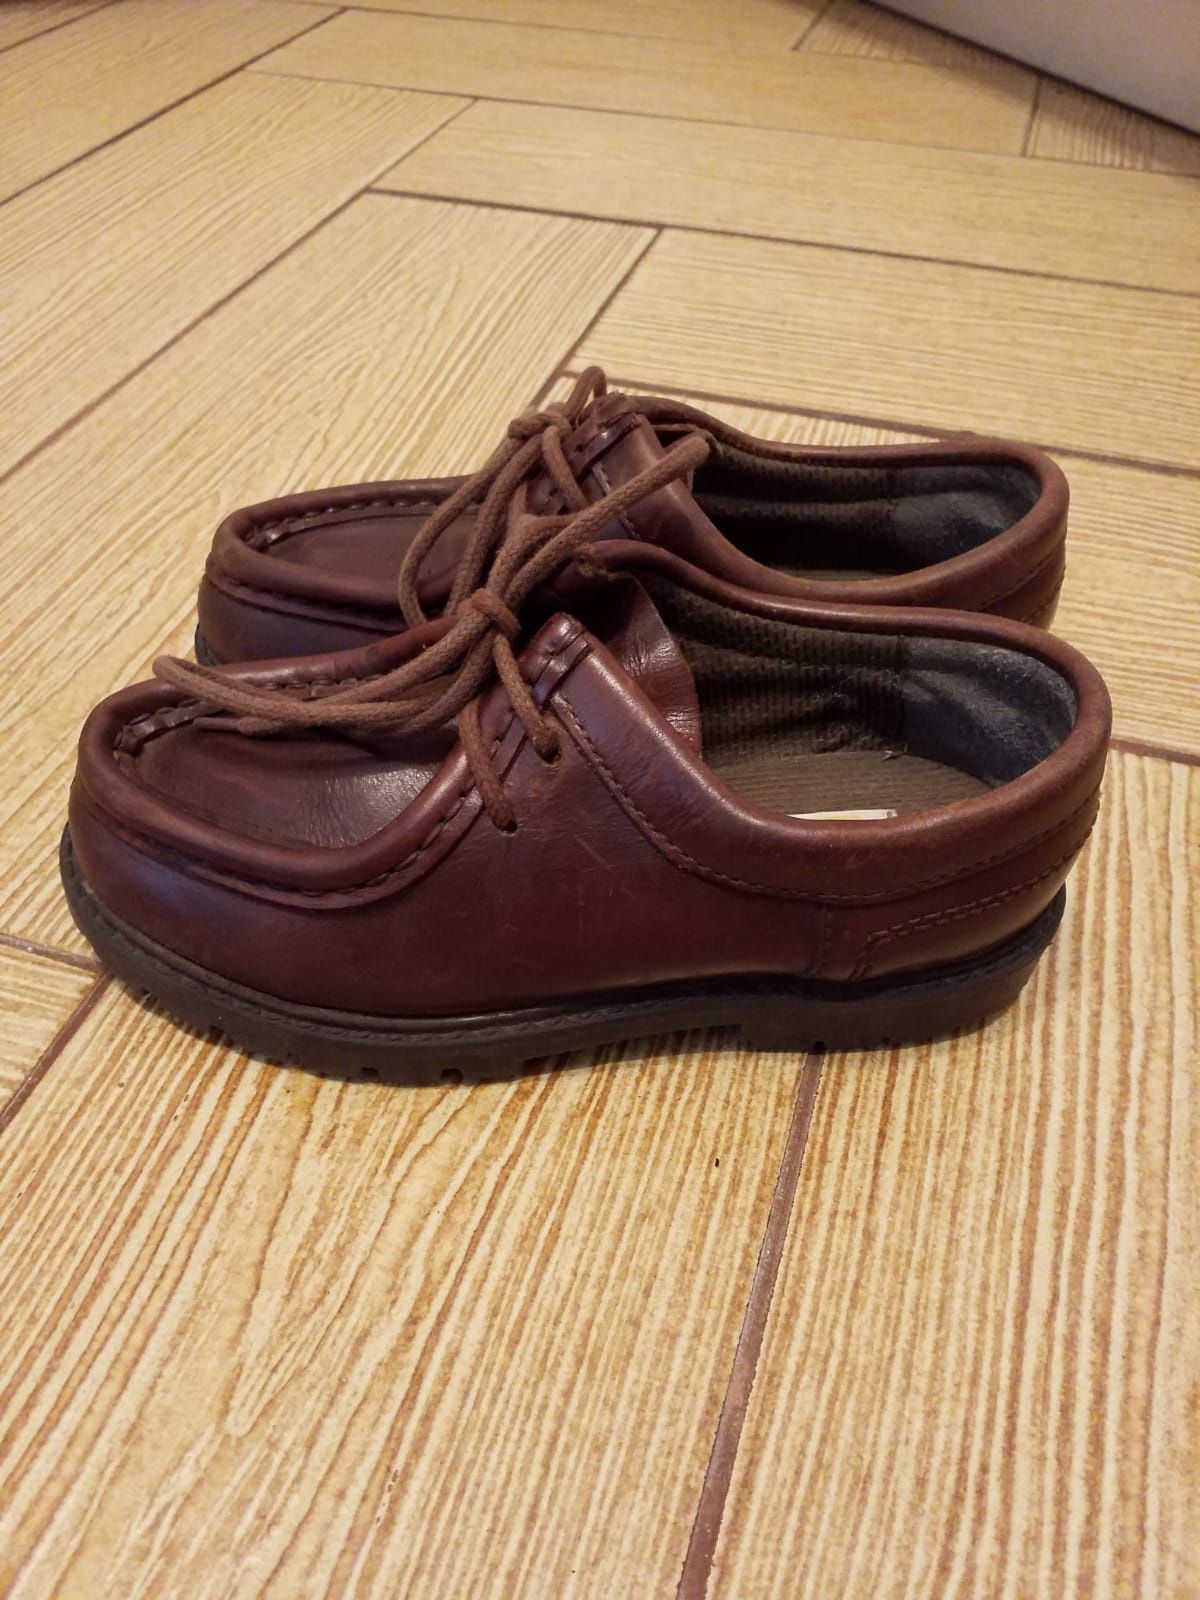 Pantofi Bata piele naturala marime 31.